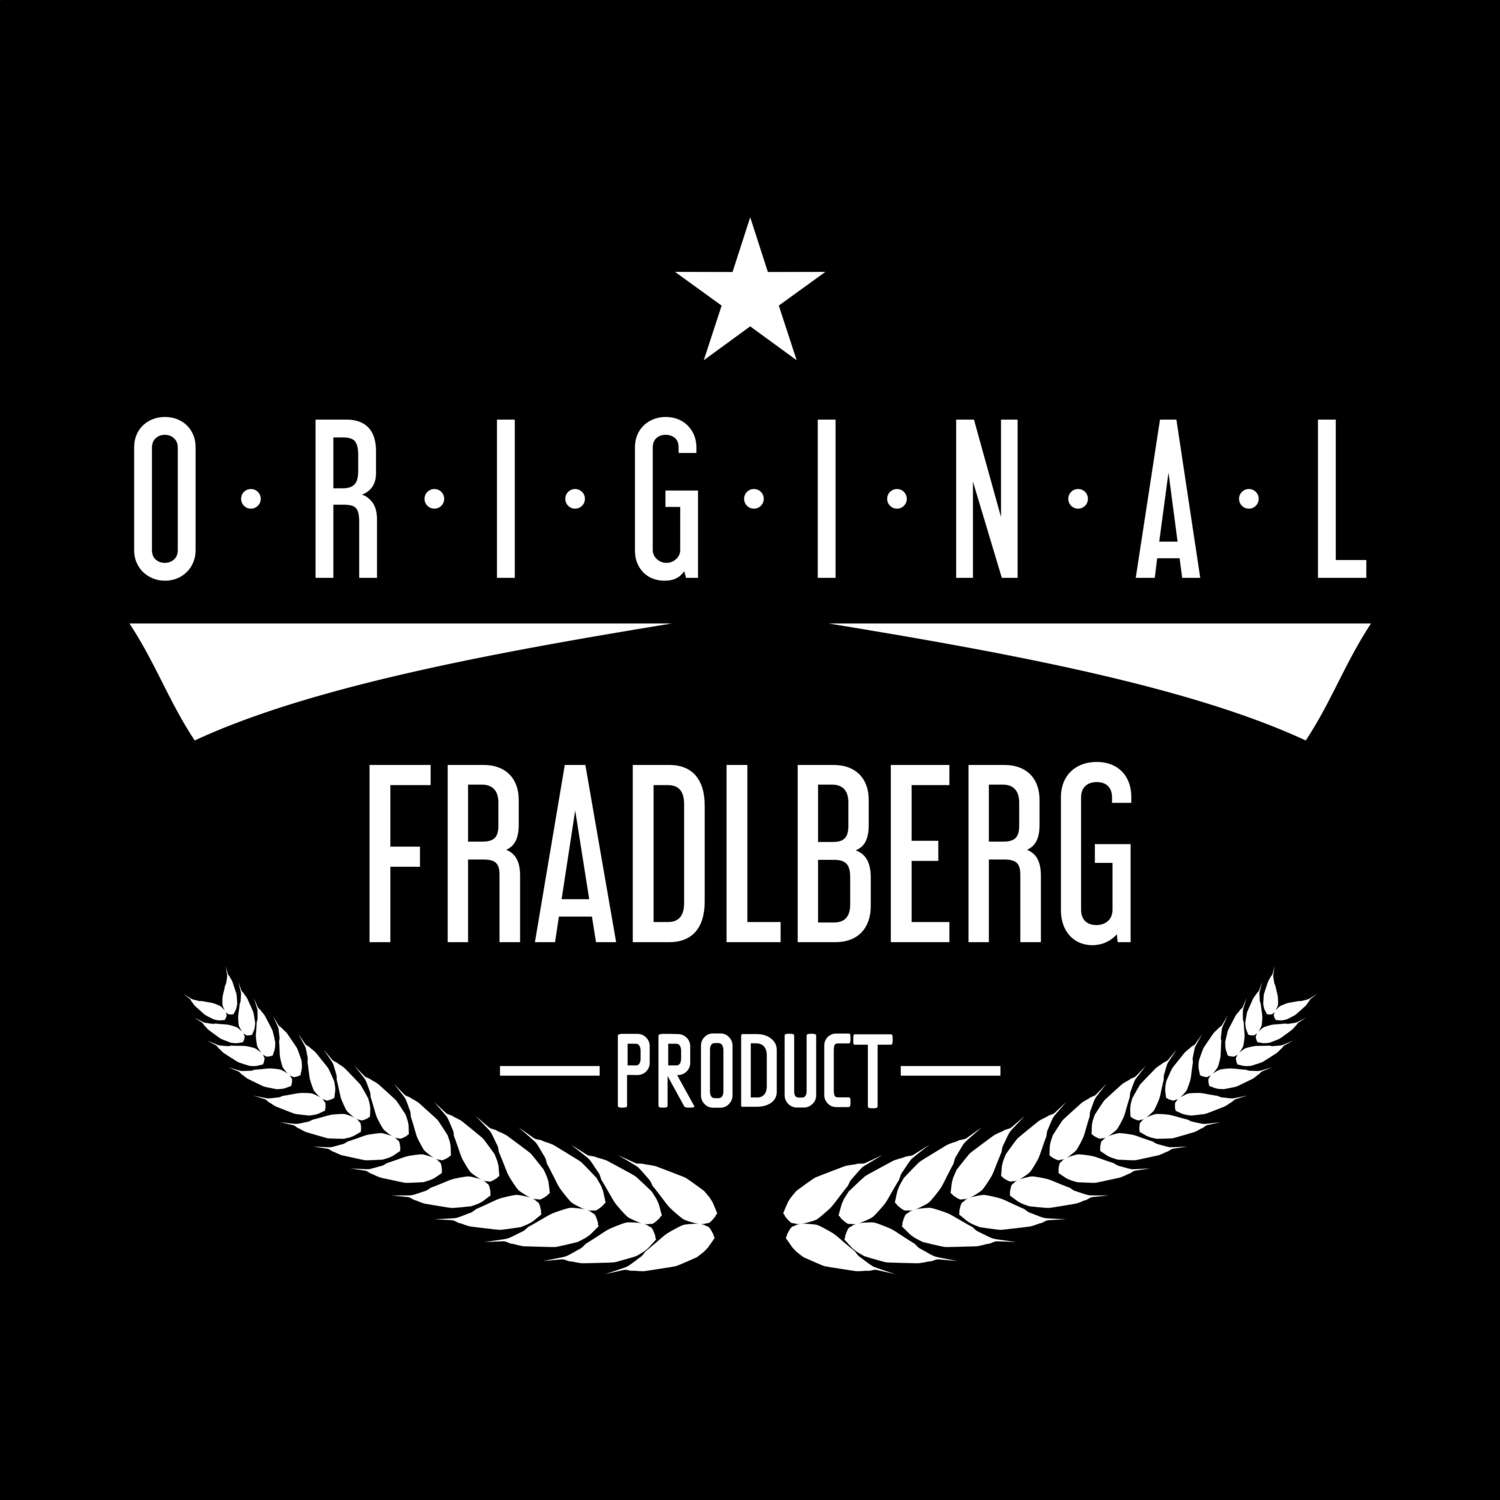 Fradlberg T-Shirt »Original Product«